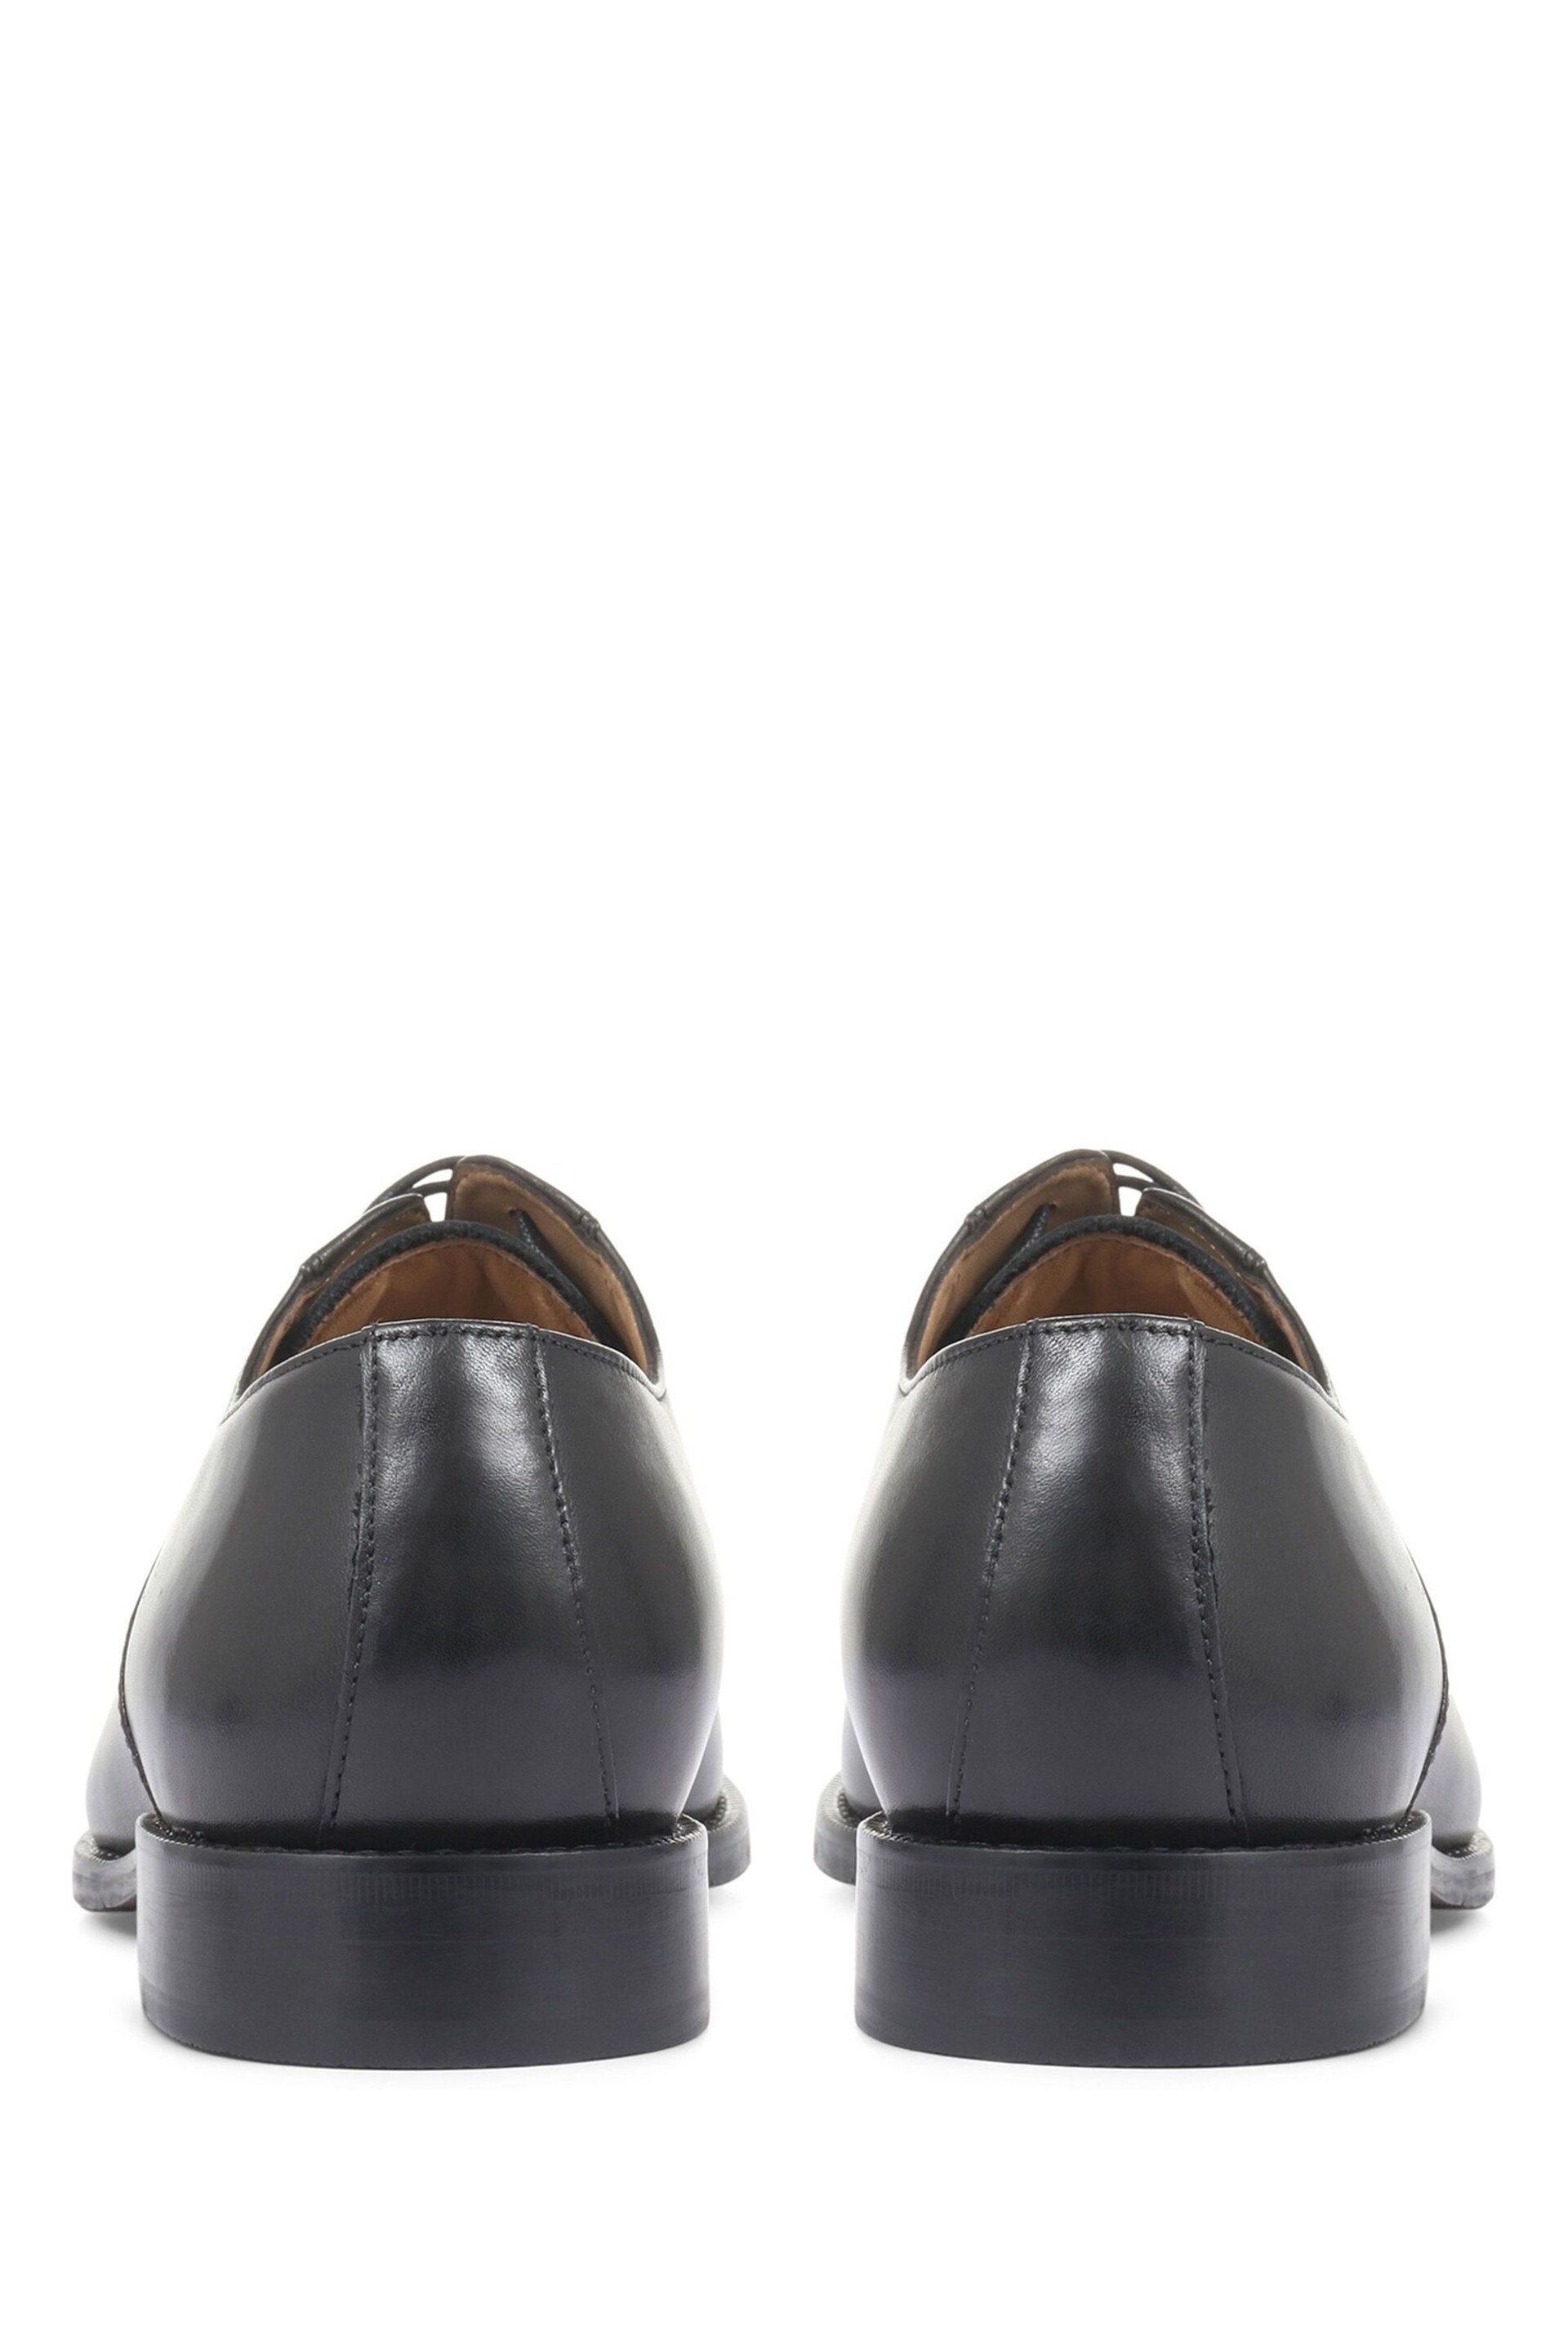 Jones Bootmaker Matthew Tan Leather Oxford Shoes - Image 3 of 6